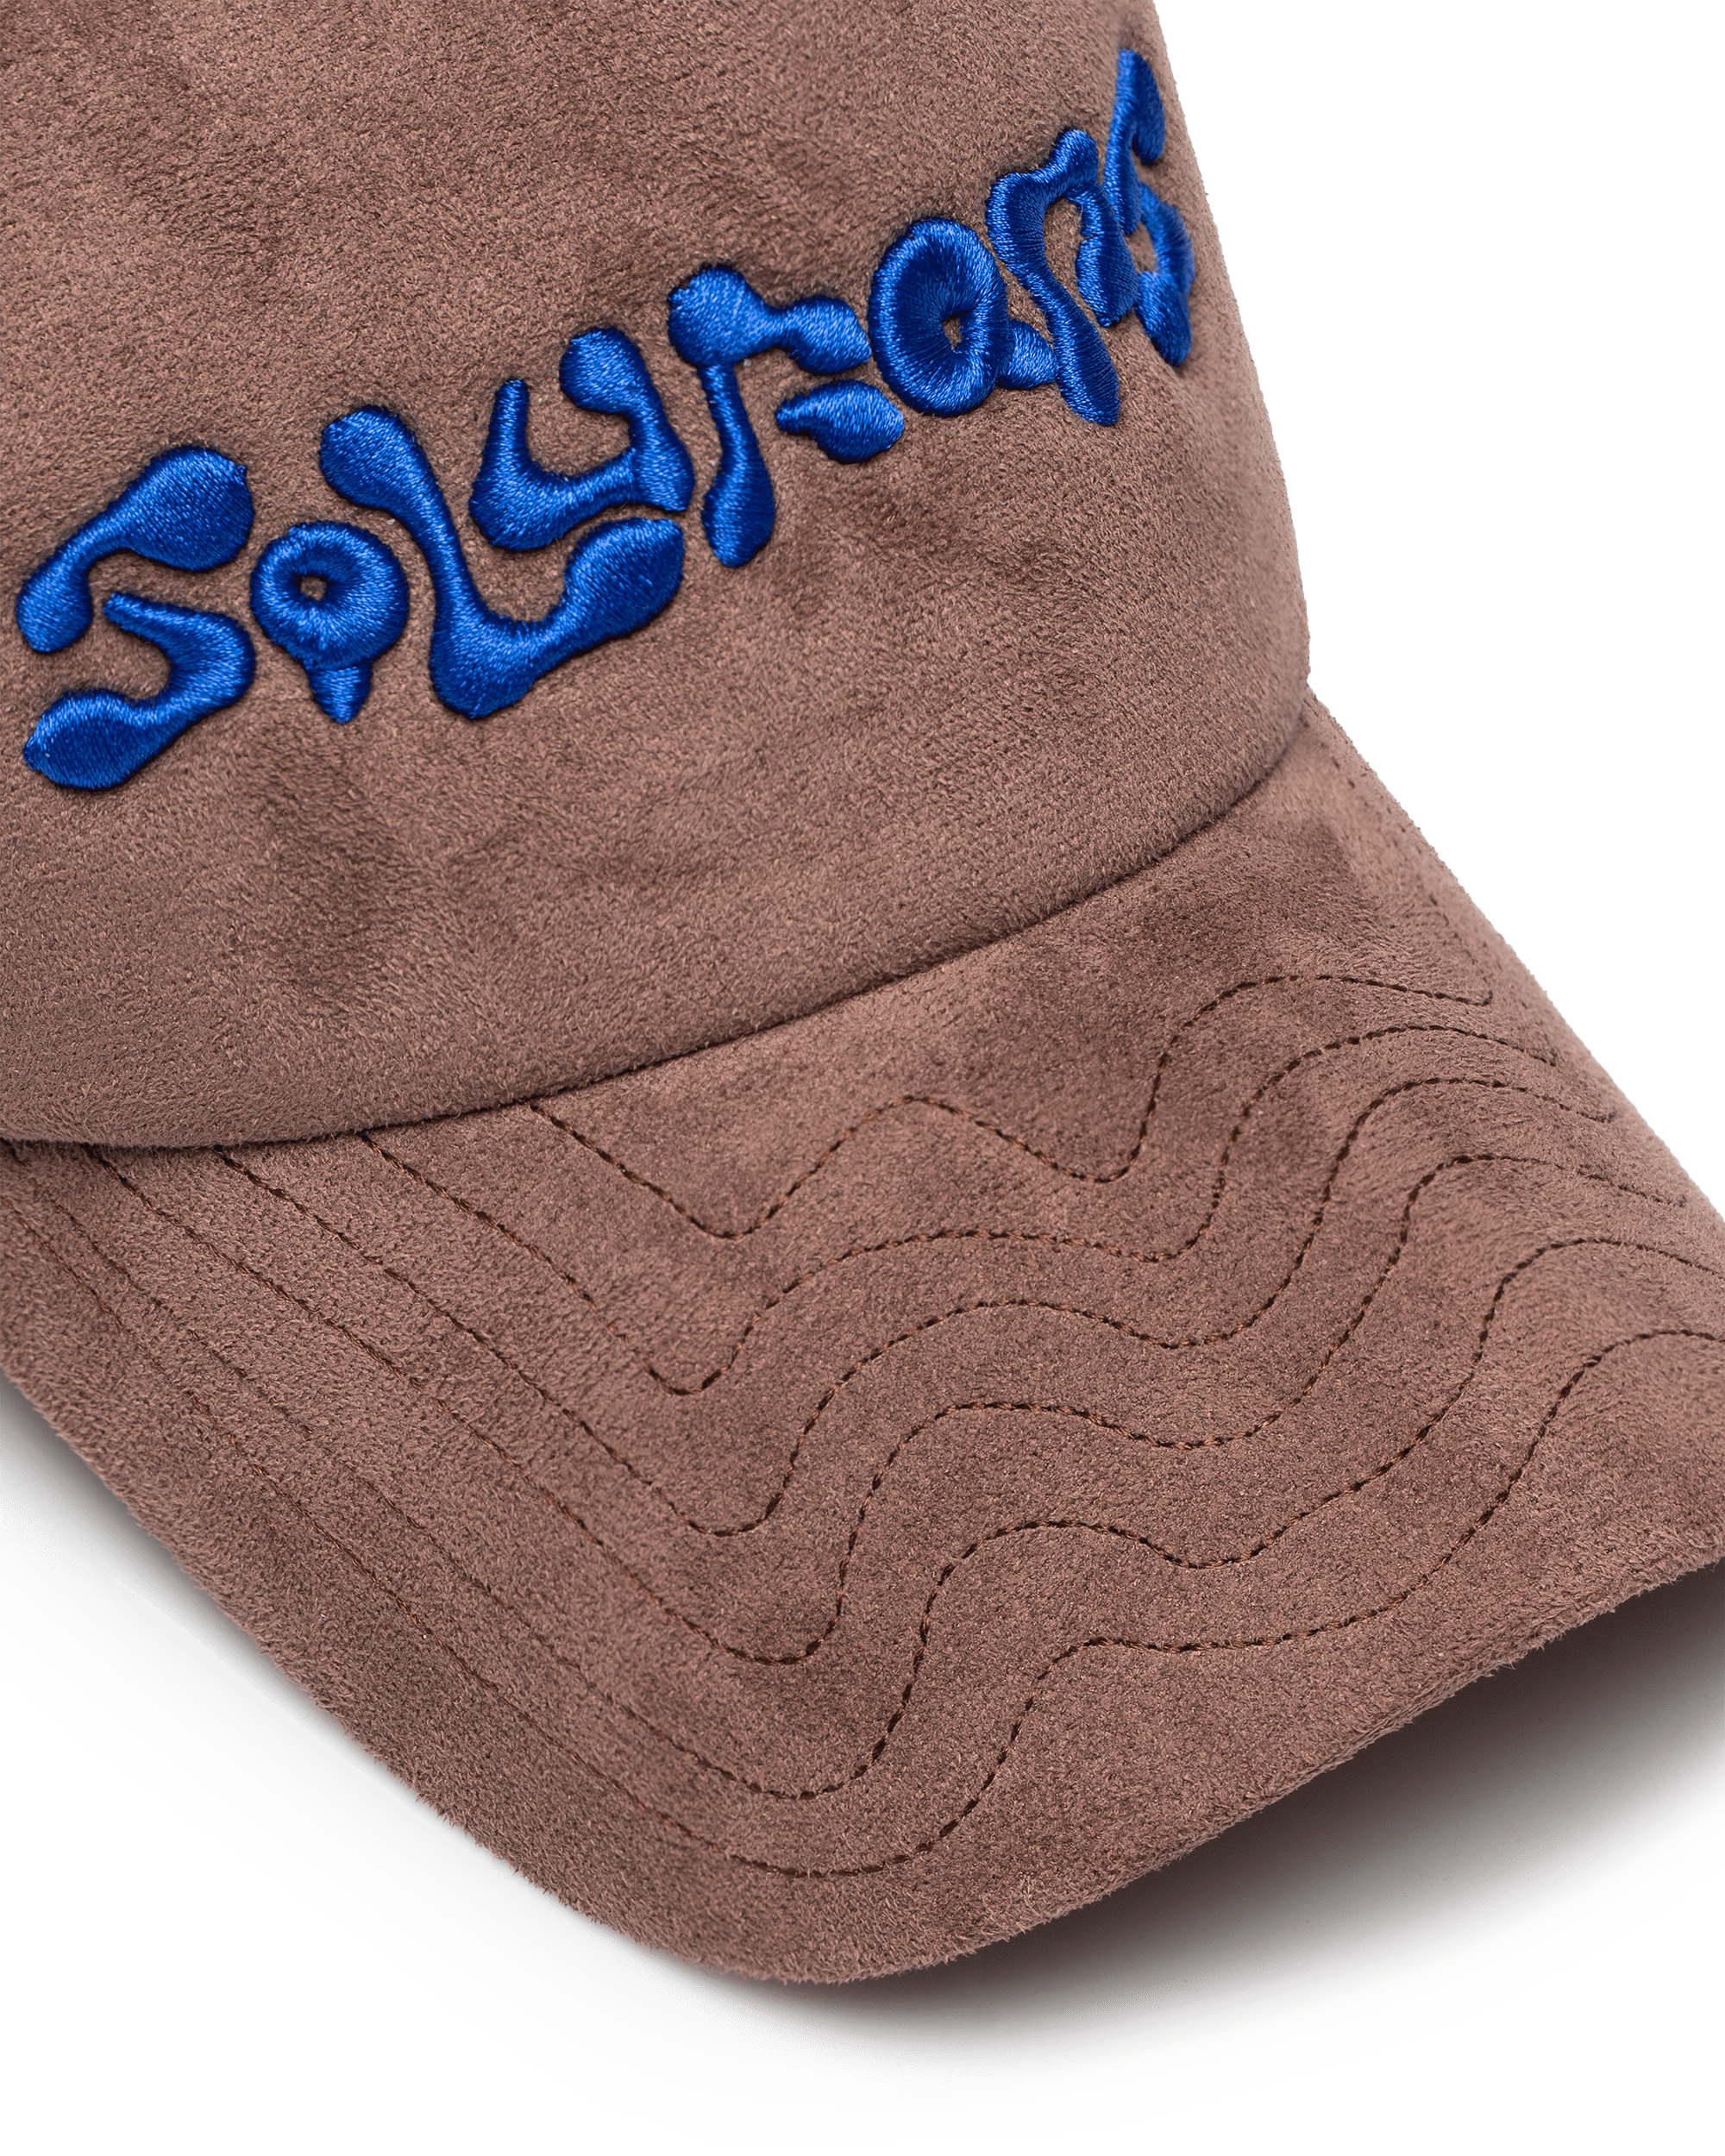 'WAV' suede cap, brown